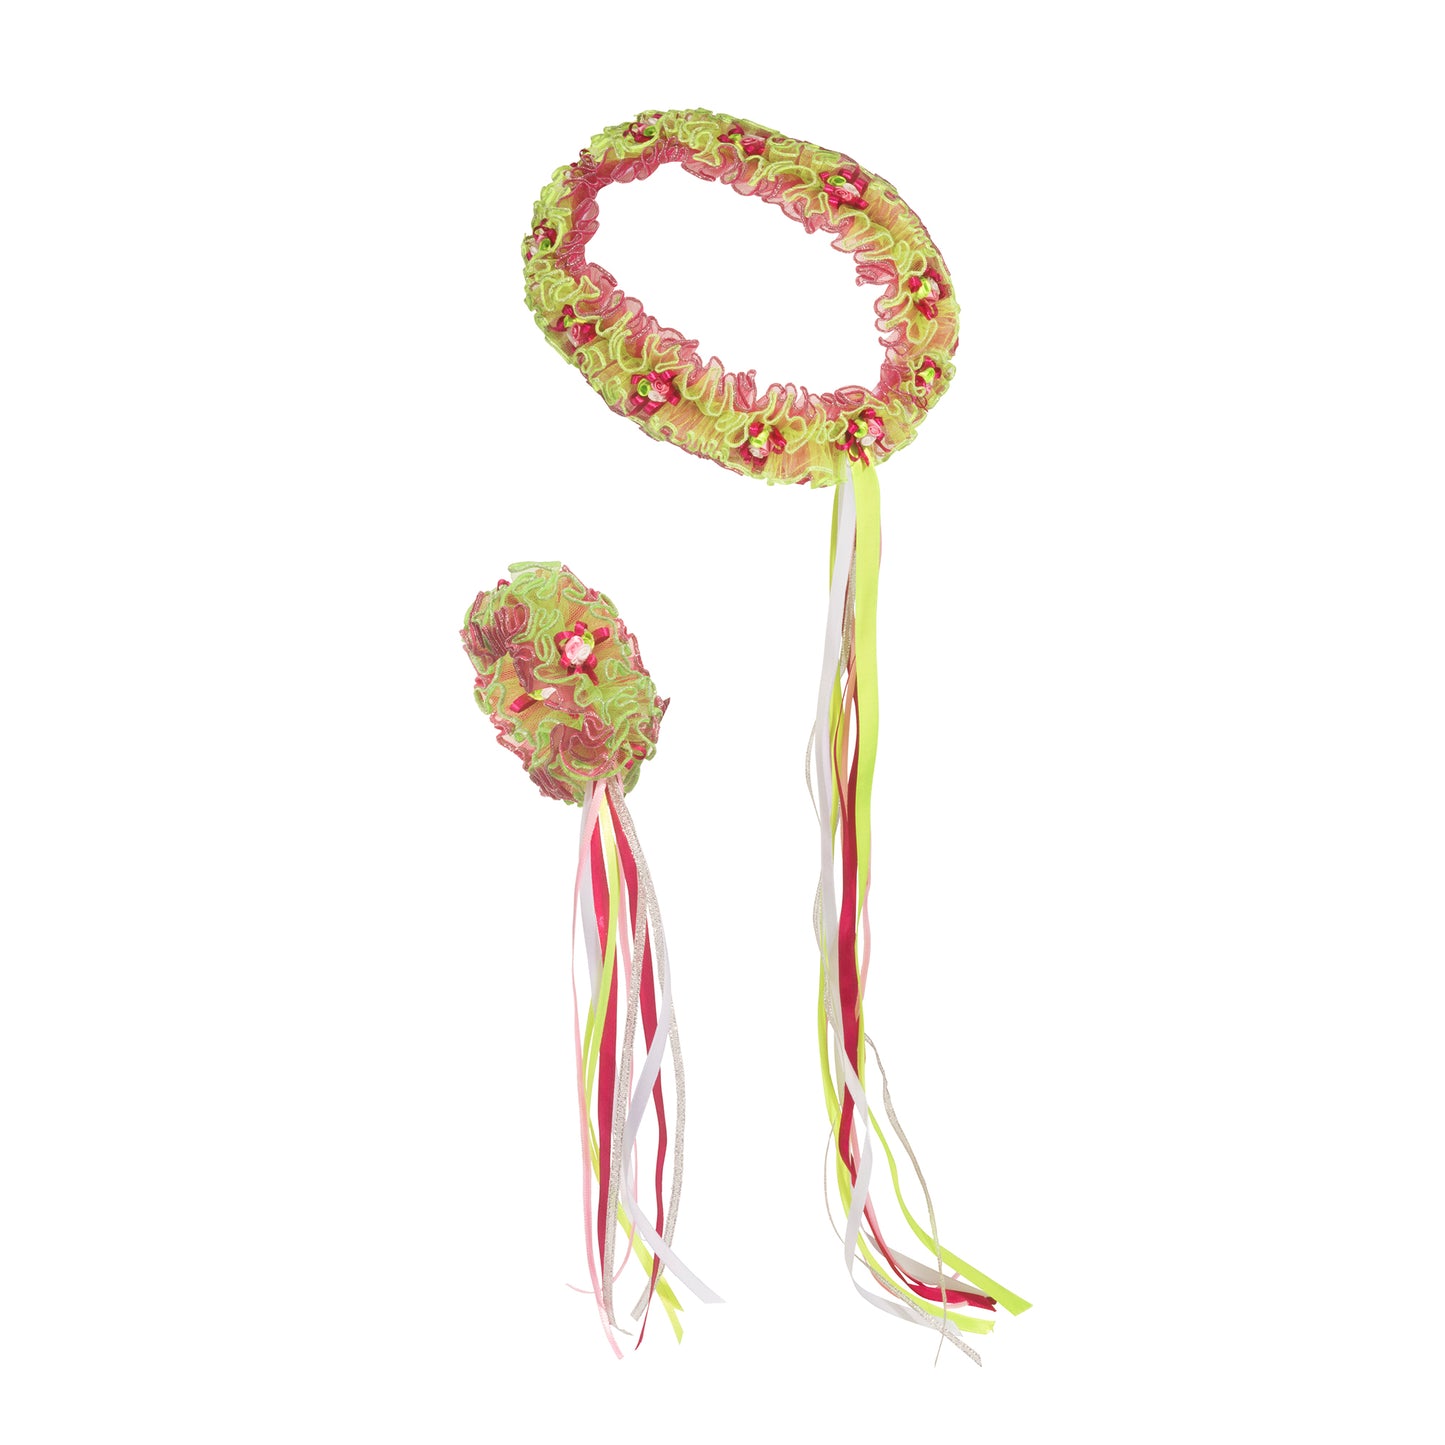 FLOWER WRAP HEADBAND + TWISTER in eco-friendly Dreamy Dress-Ups cotton gift bag